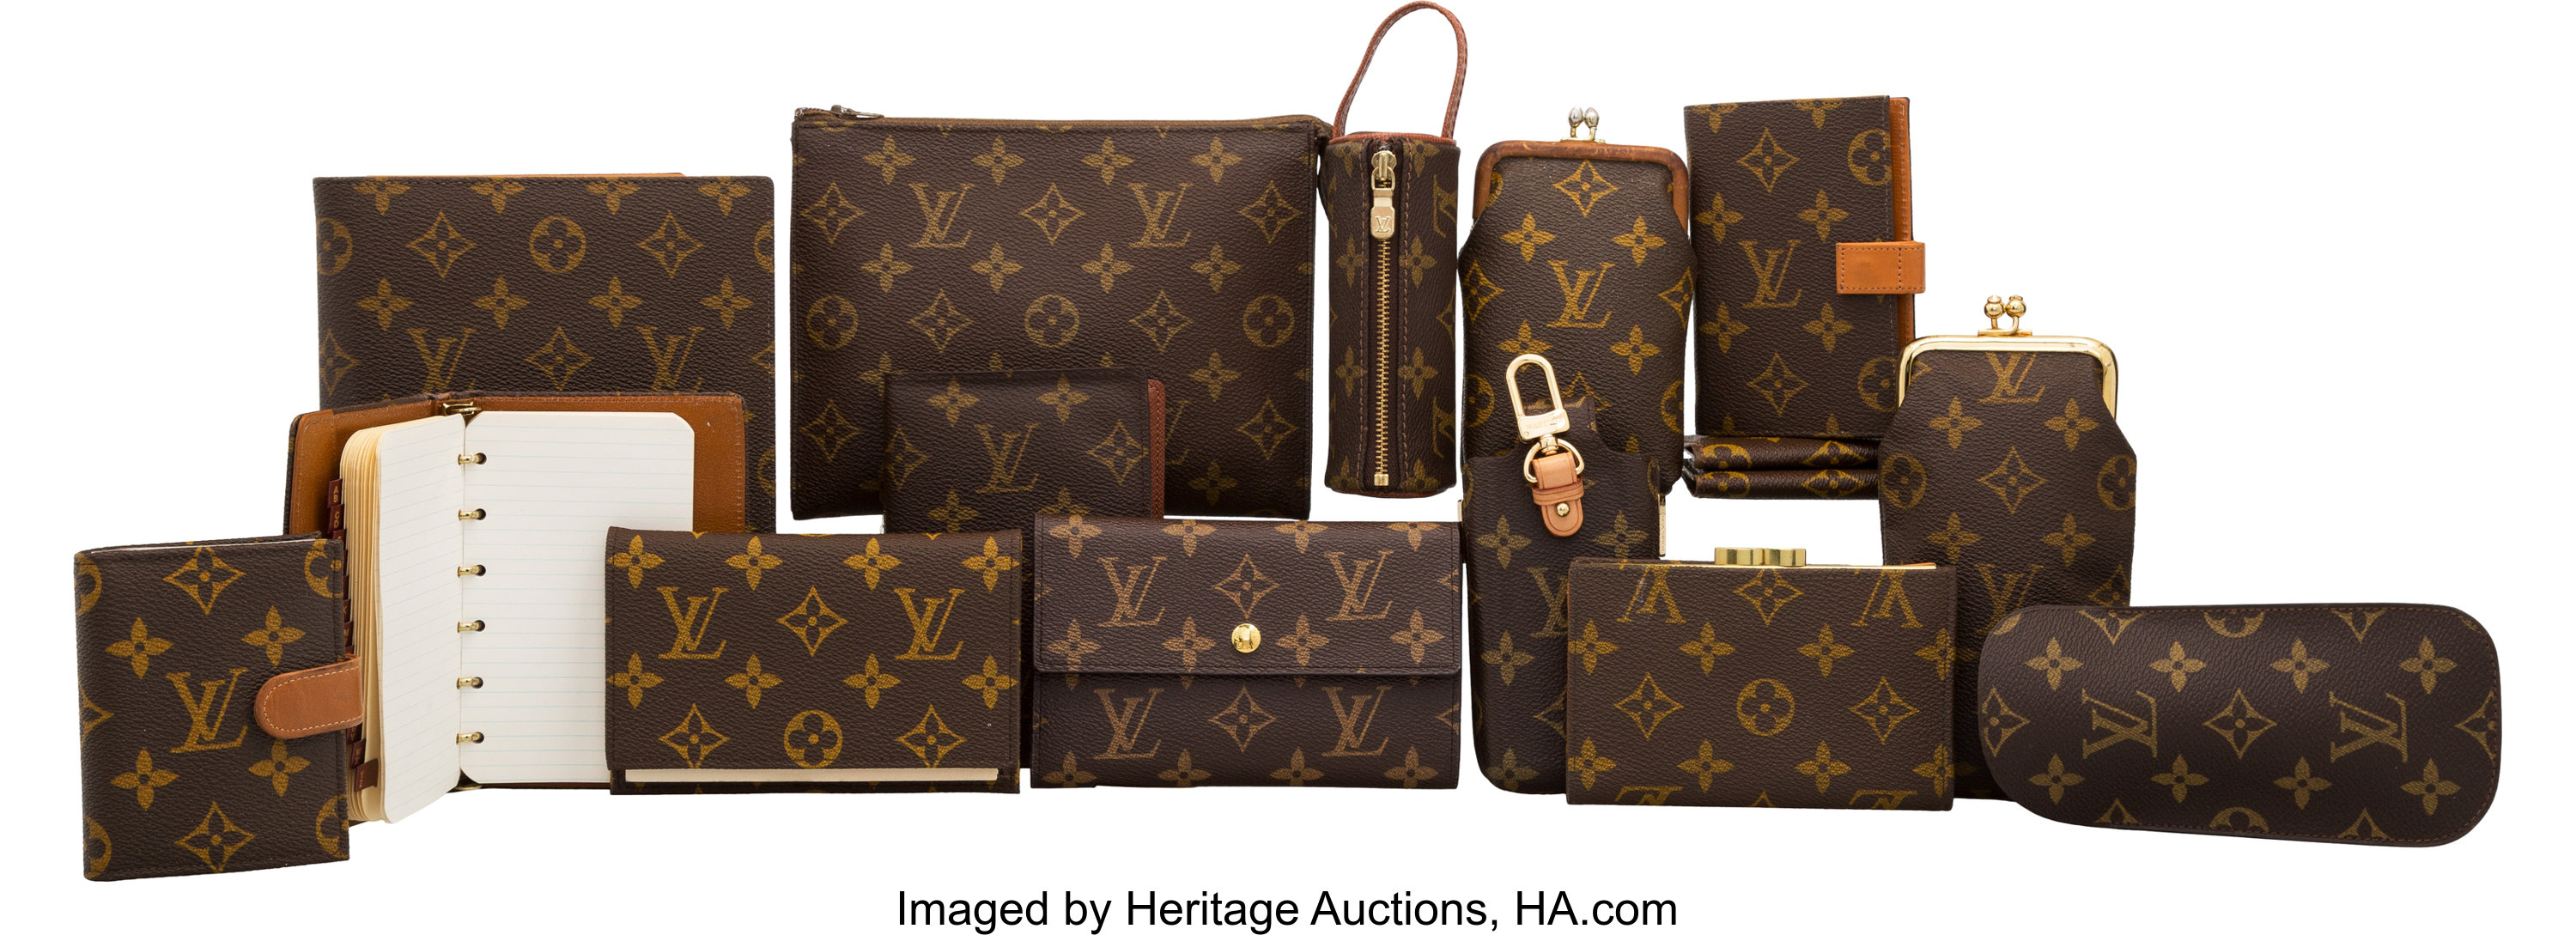 Singaporean spends US$1,779 on Louis Vuitton bag, gets empty box instead -  Life